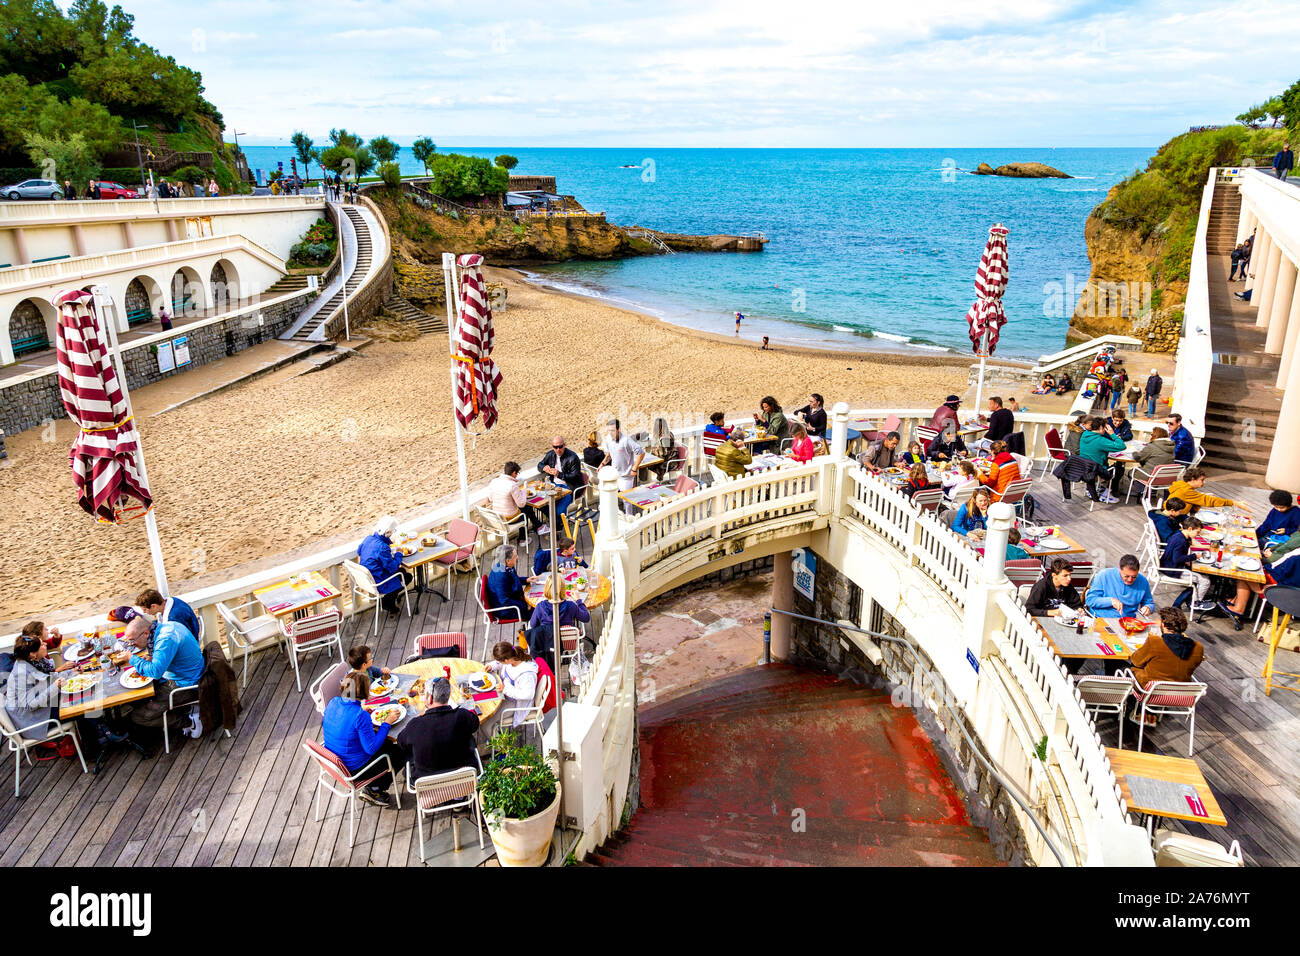 People dining at Aréna Biarritz restaurant overlooking Plage du Port Vieux, Biarritz, France Stock Photo